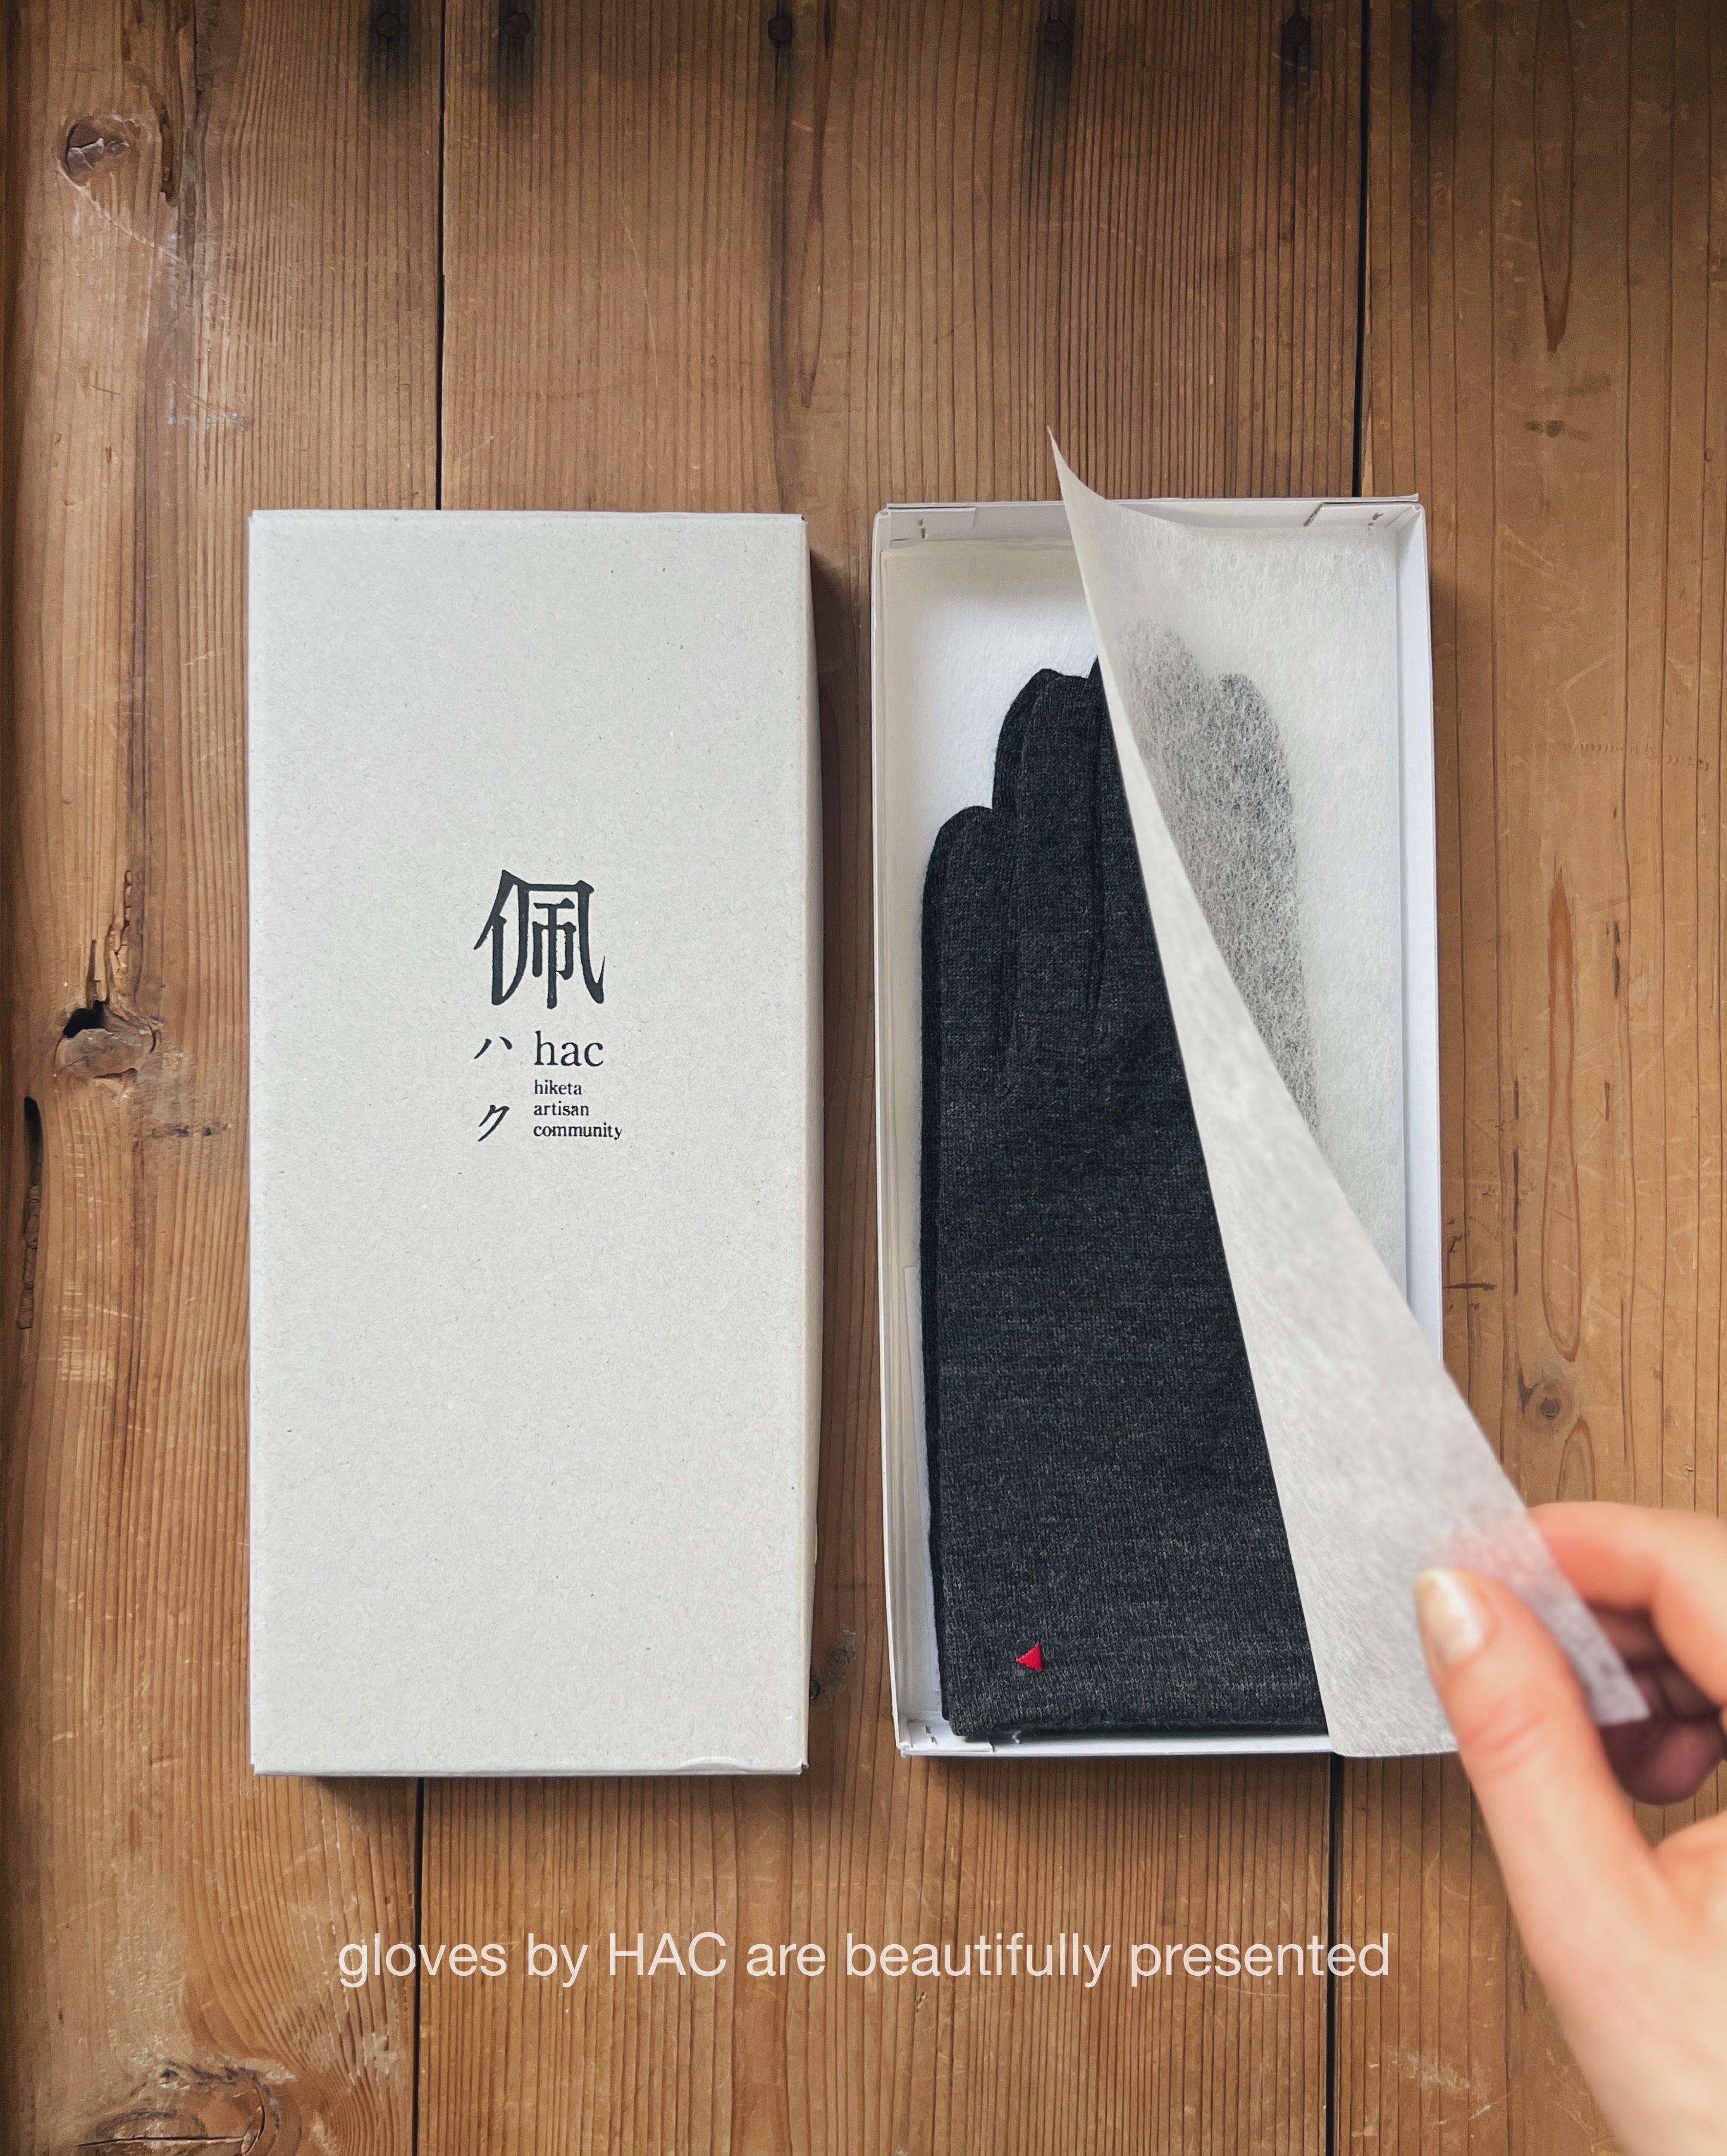 japanese made wool gloves from HAC (hiteka artisan community) Japan